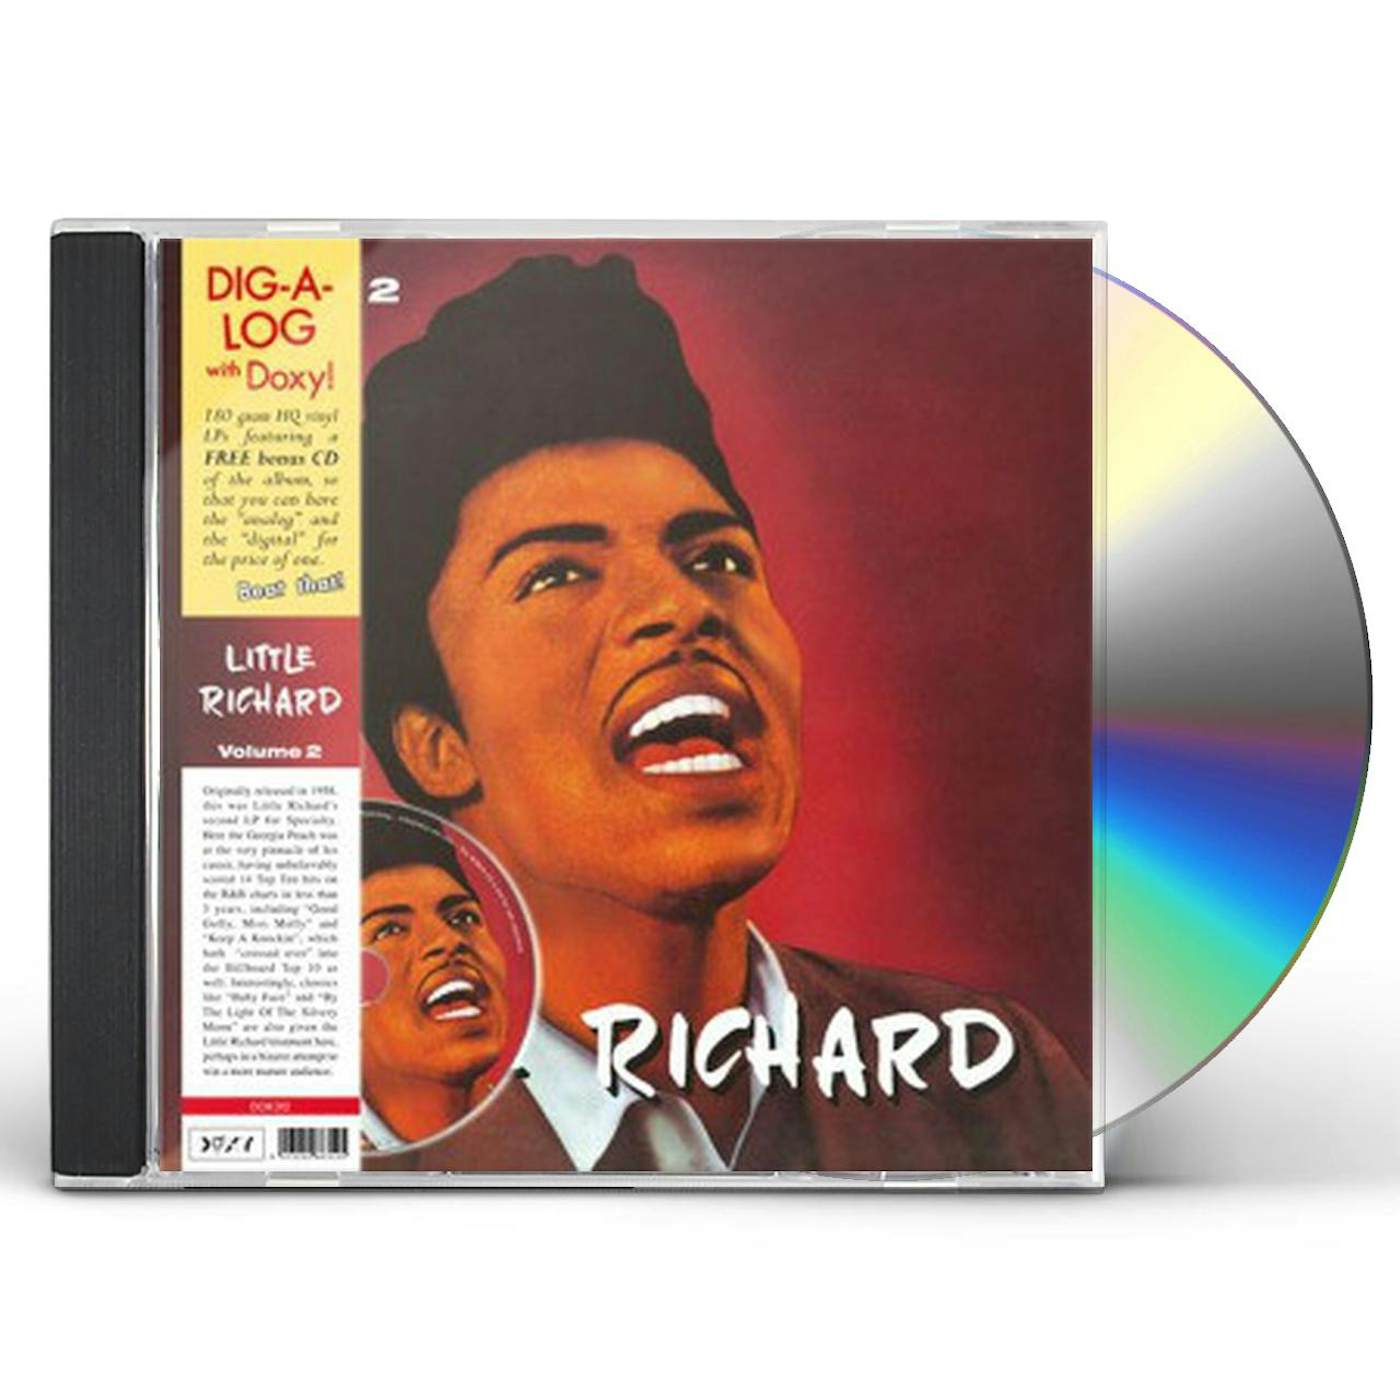 Little Richard VOLUME 2 Vinyl Record